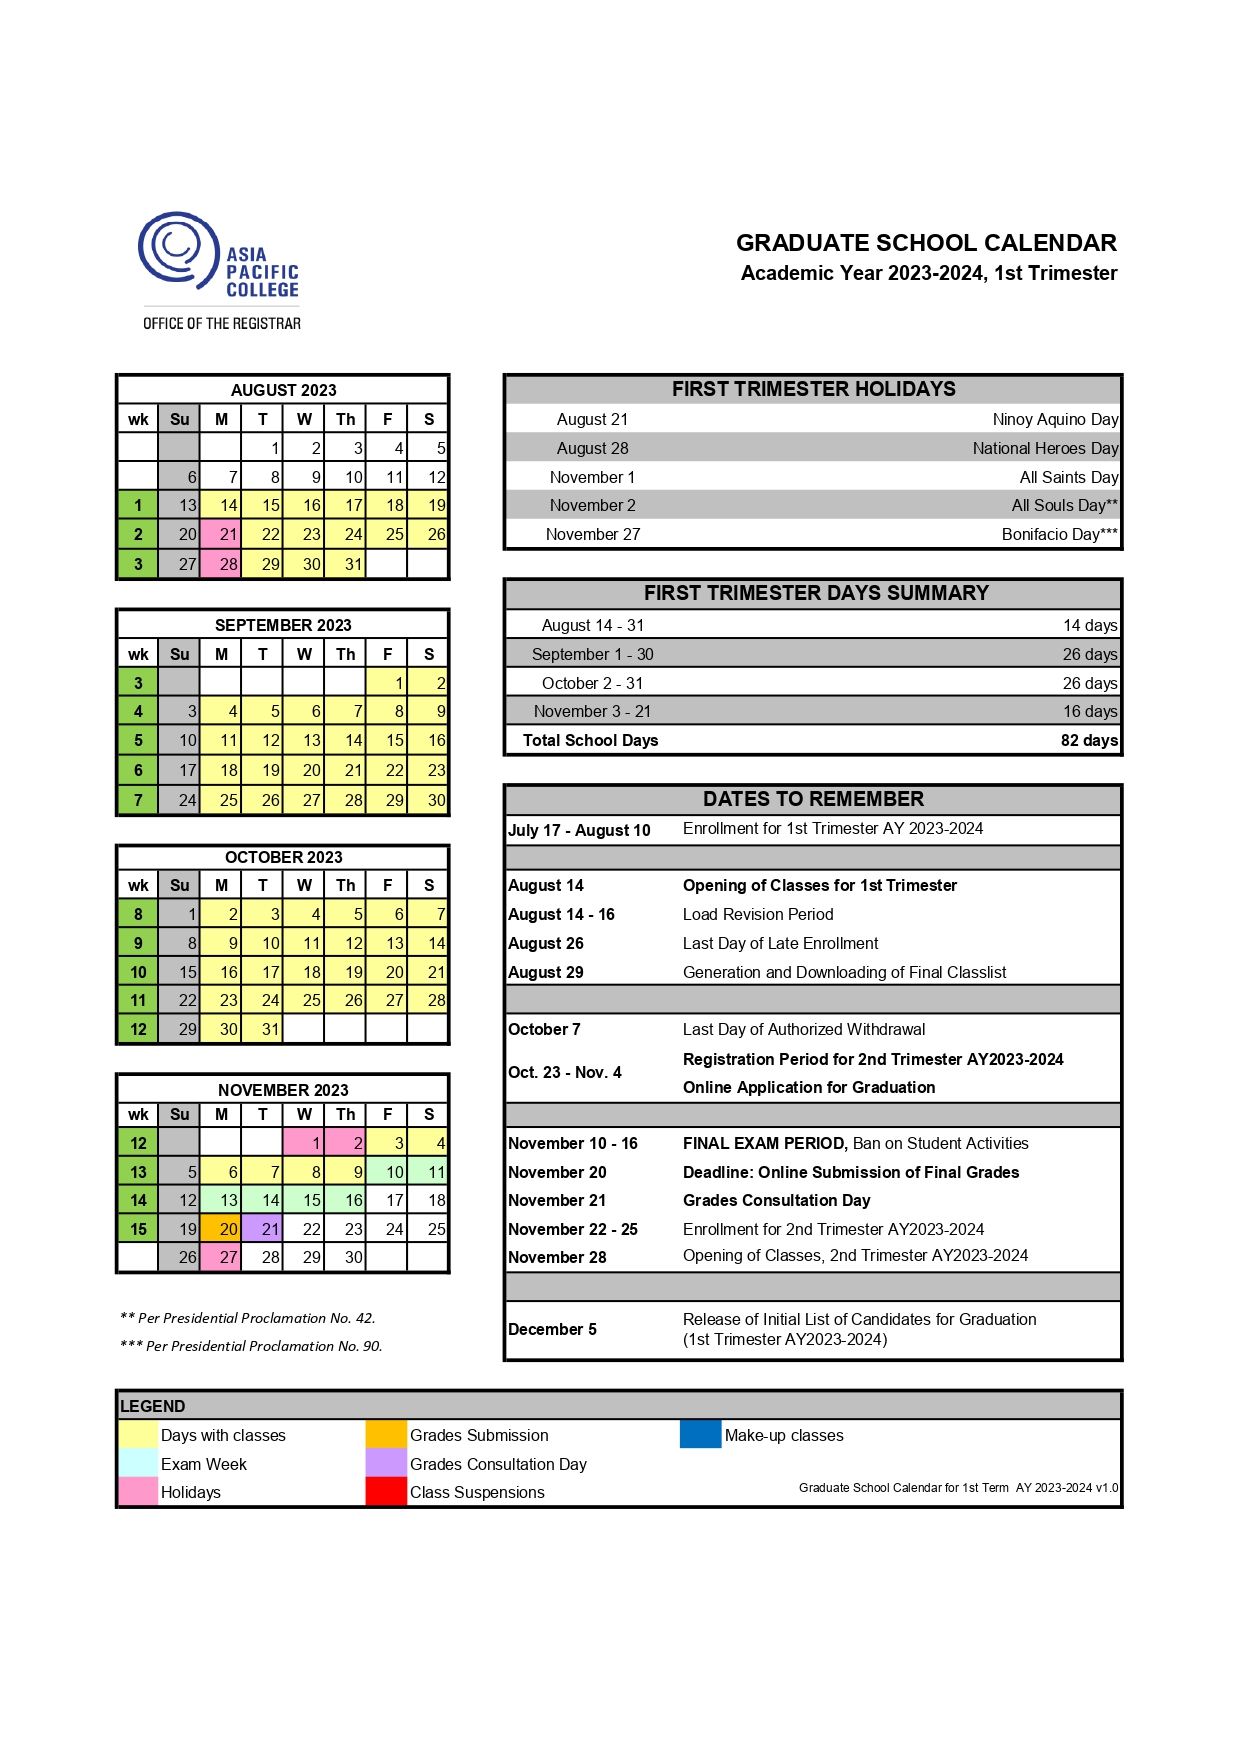 Term 1 Calendar (AY2023-24) - Graduate School v1.0_page-0001